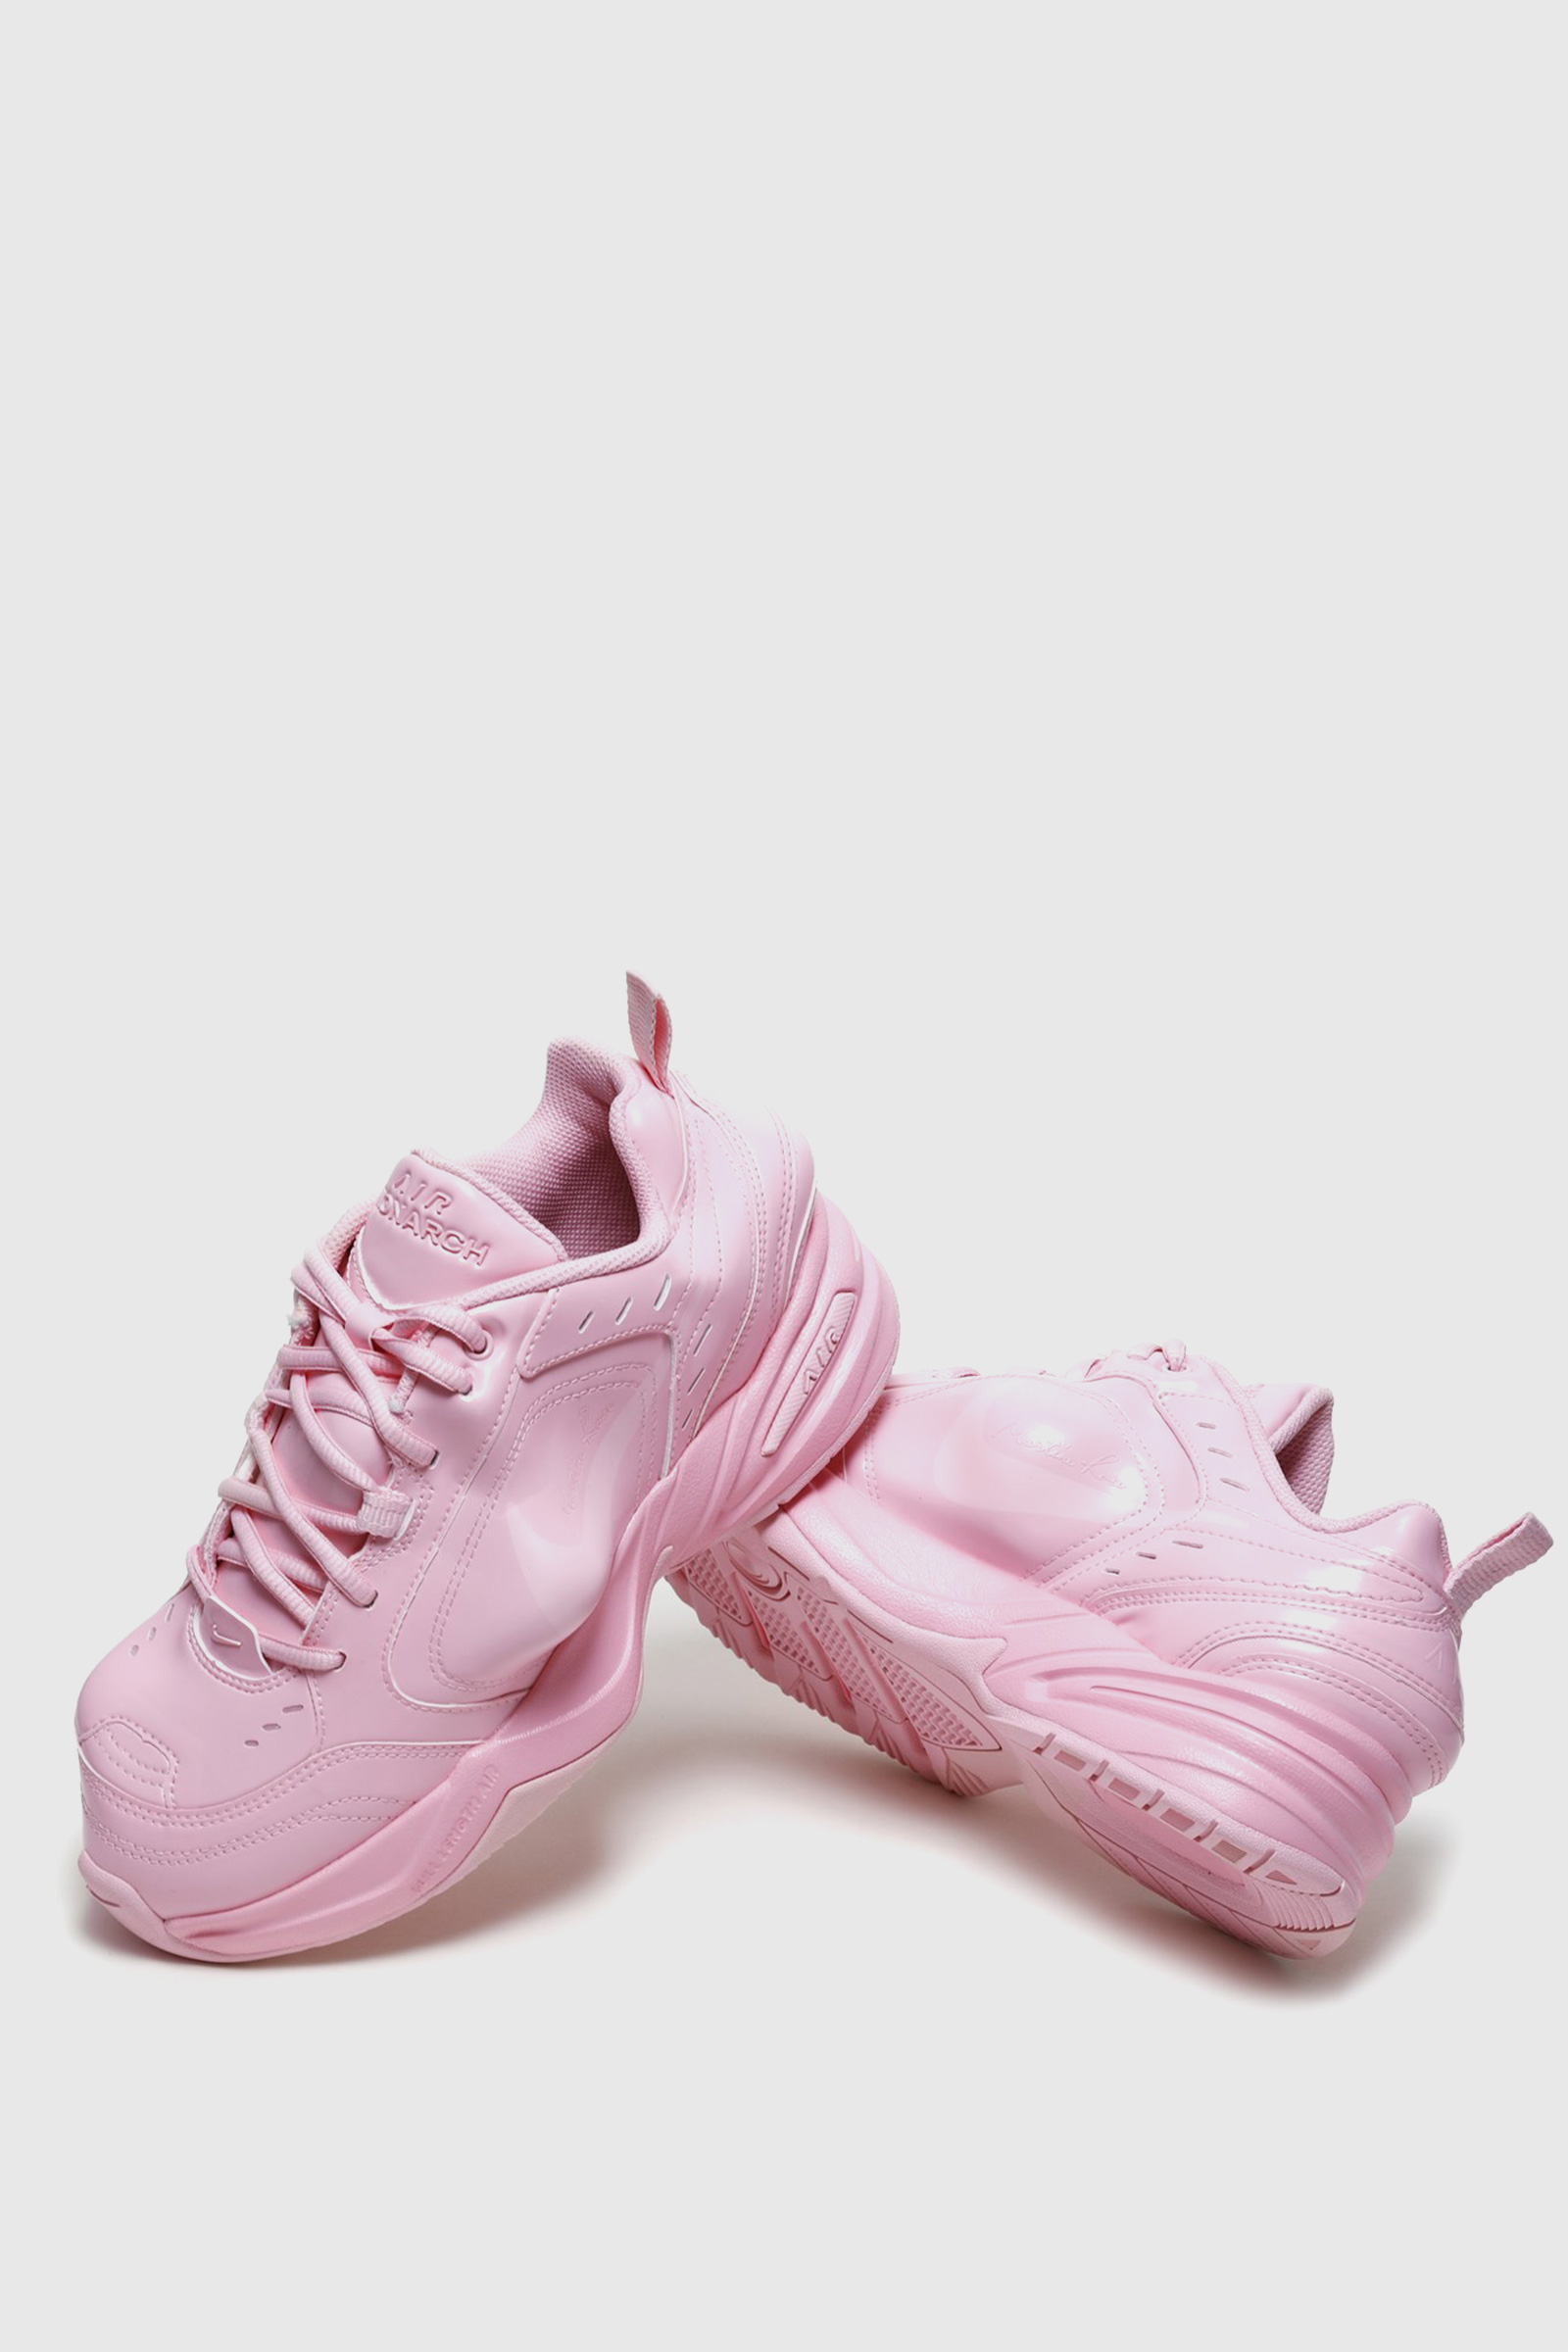 Regenerador fuga Etna Nike Nike x Martine Rose Air Monarch IV Soft pink/black (600) | WoodWood.com